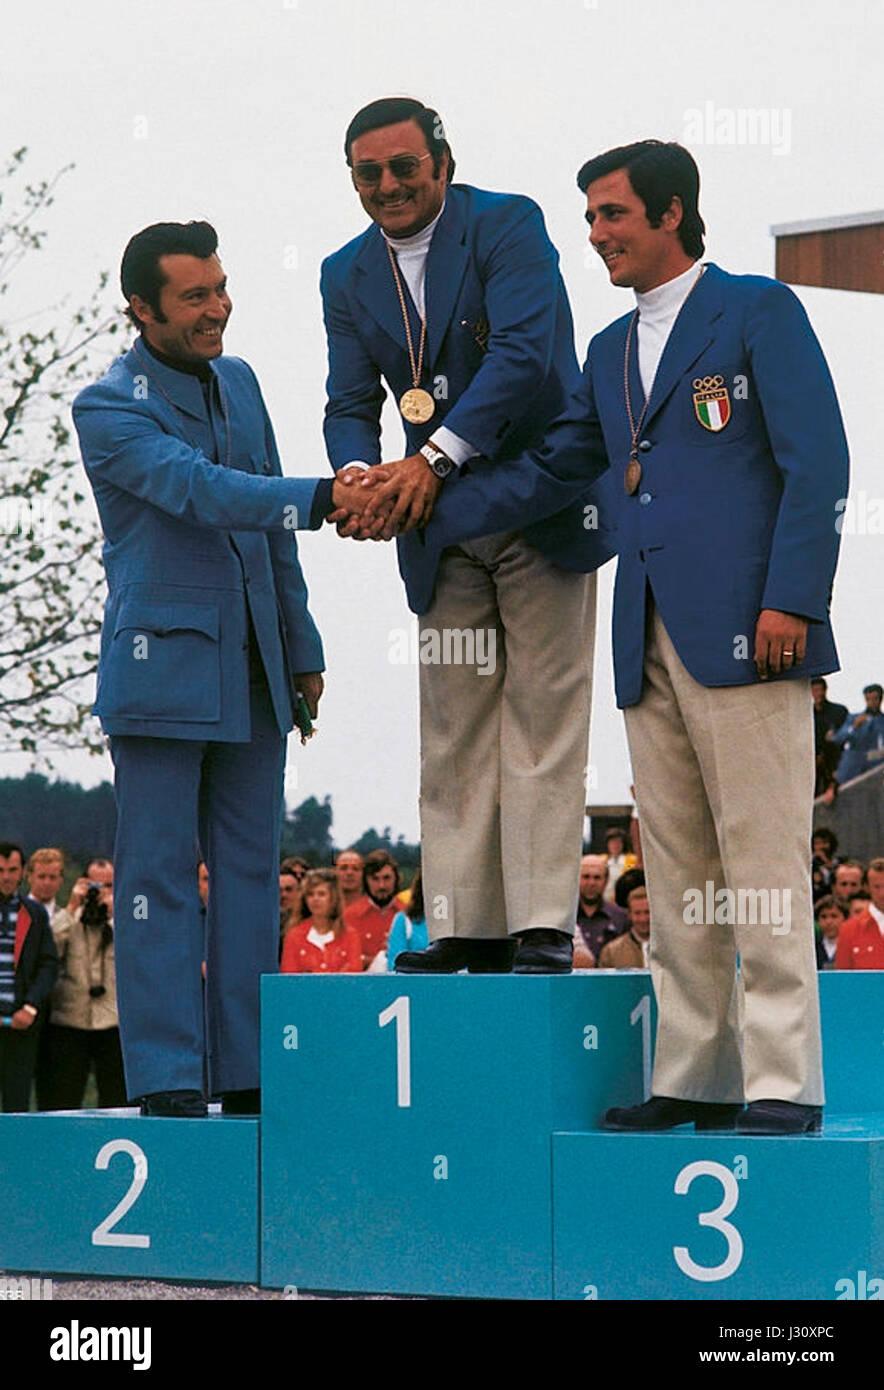 Michel Carrega, Angelo Scalzone, Silvano Basagni 1972 Stock Photo